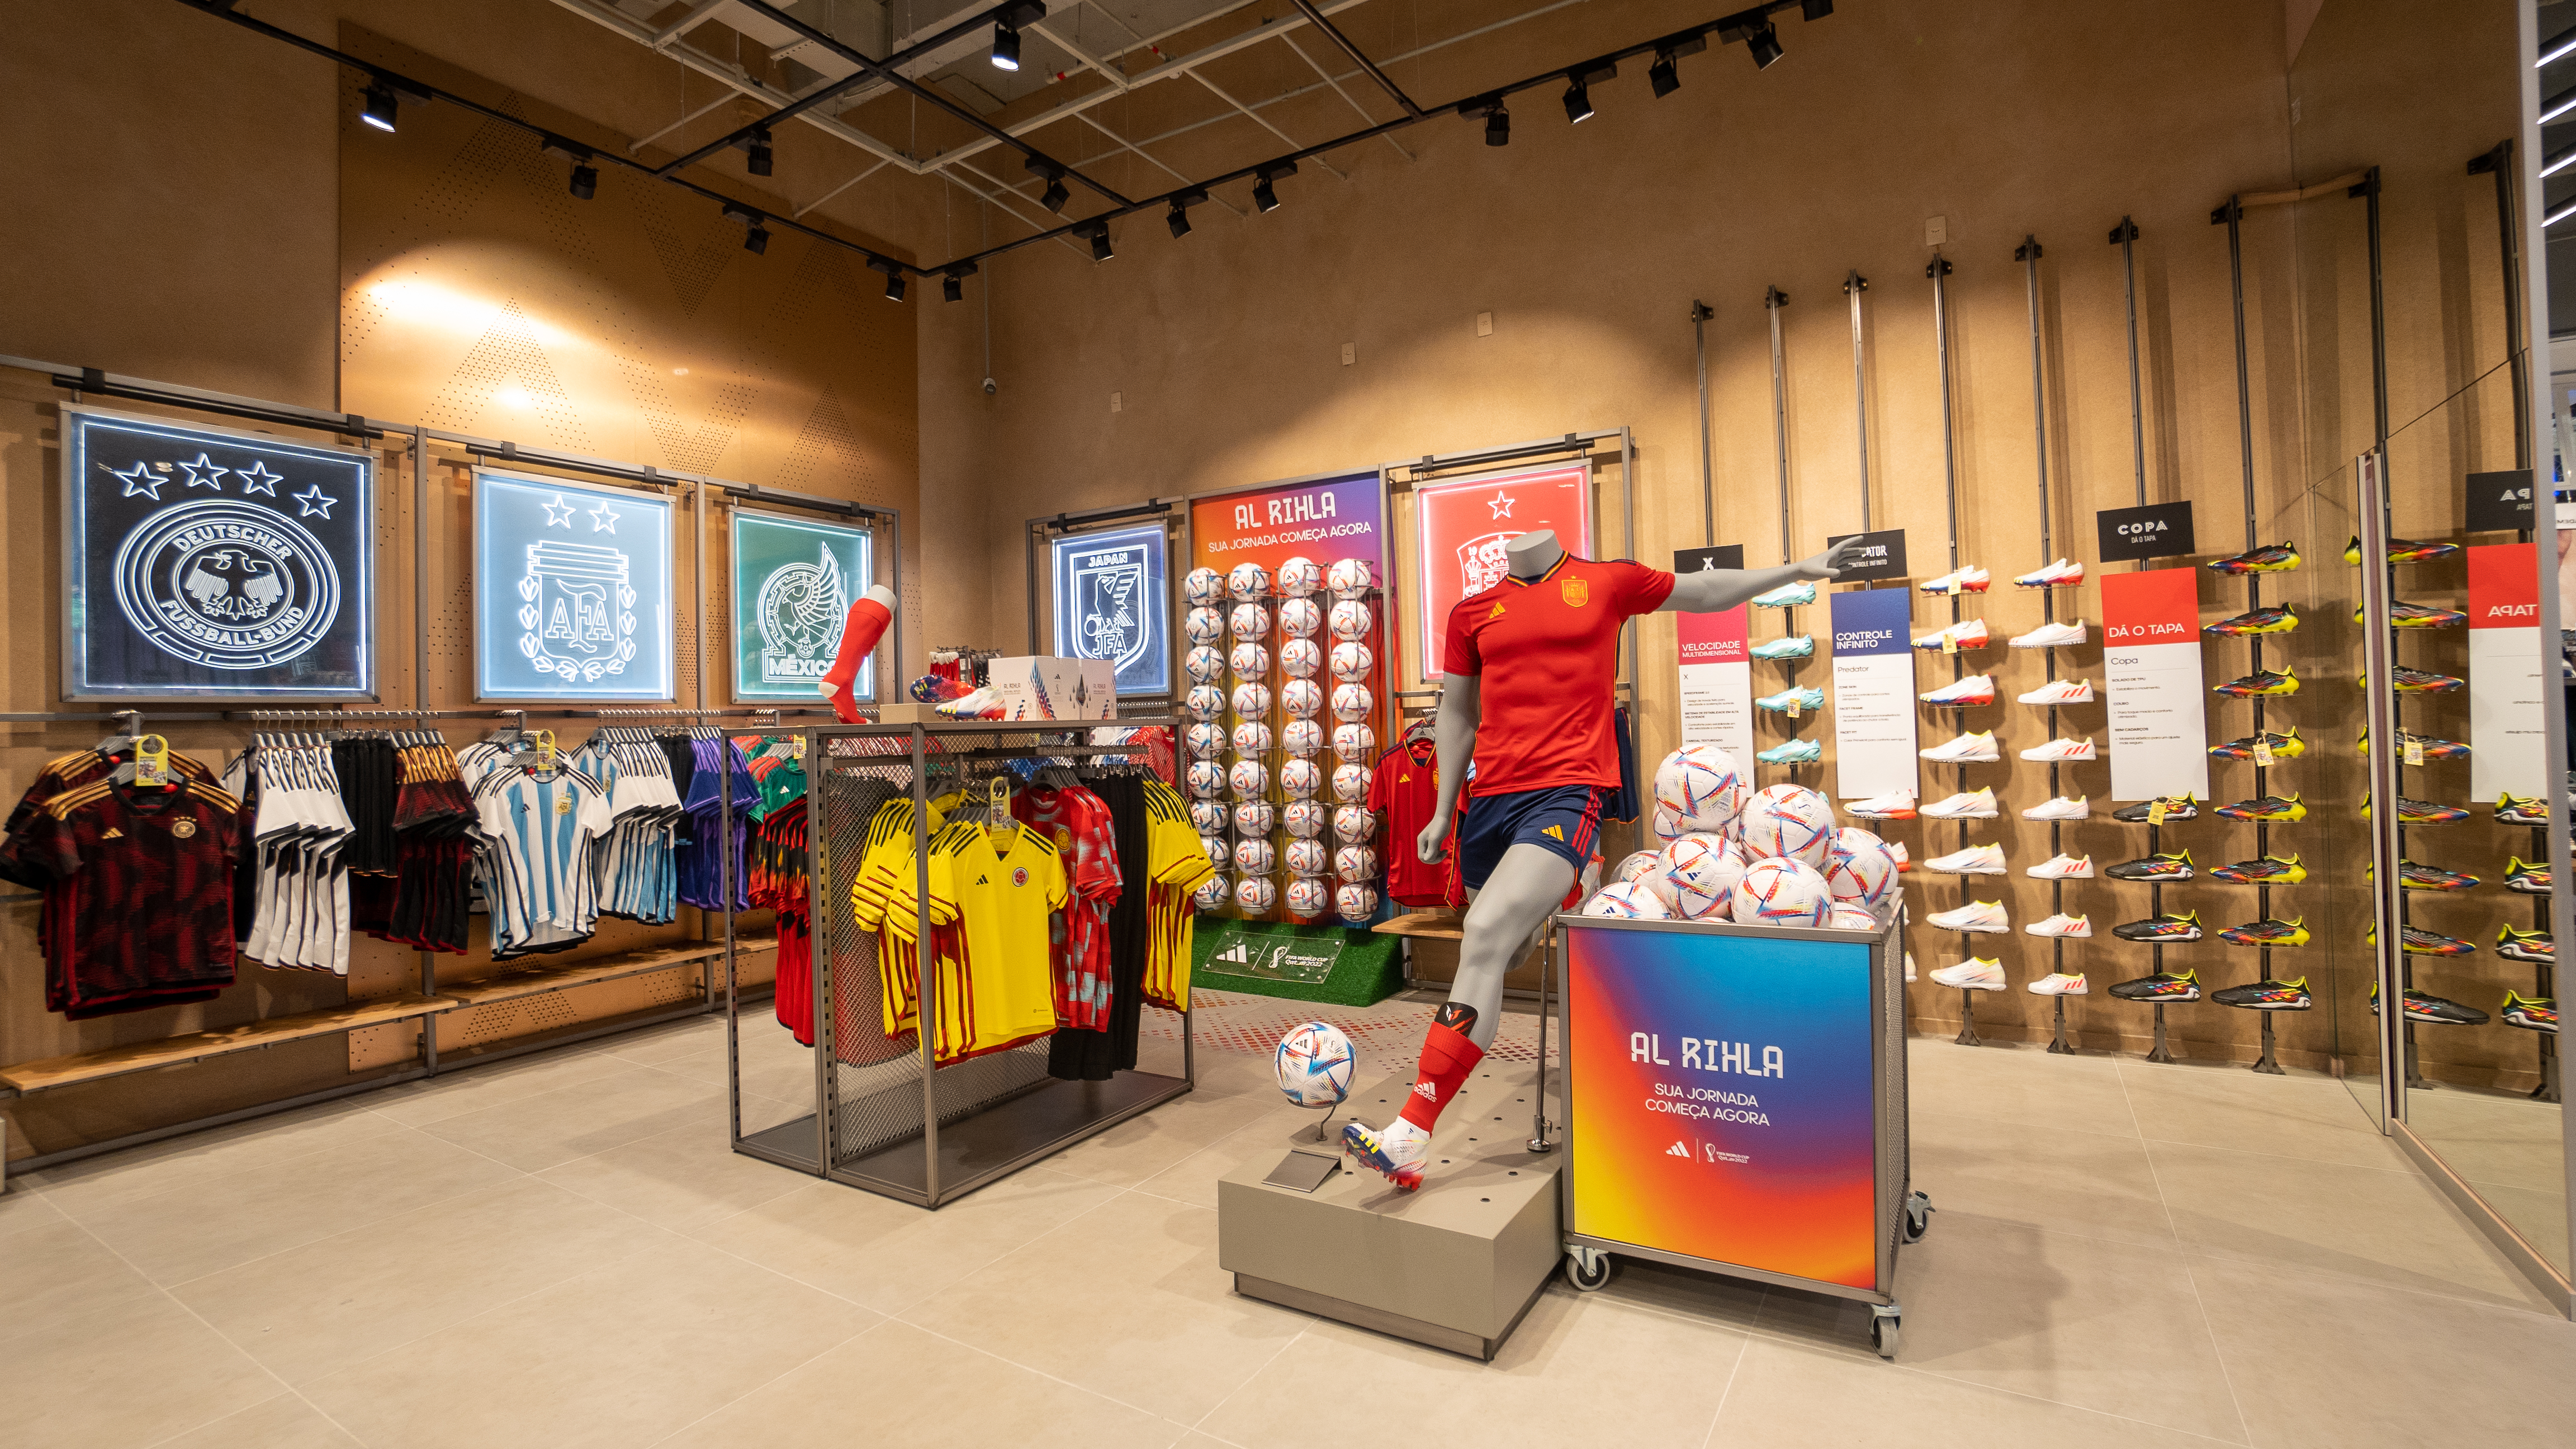 En riesgo aquí Refinería Adidas inaugura loja-conceito com 700 metros quadrados na Avenida Paulista  | VEJA SÃO PAULO